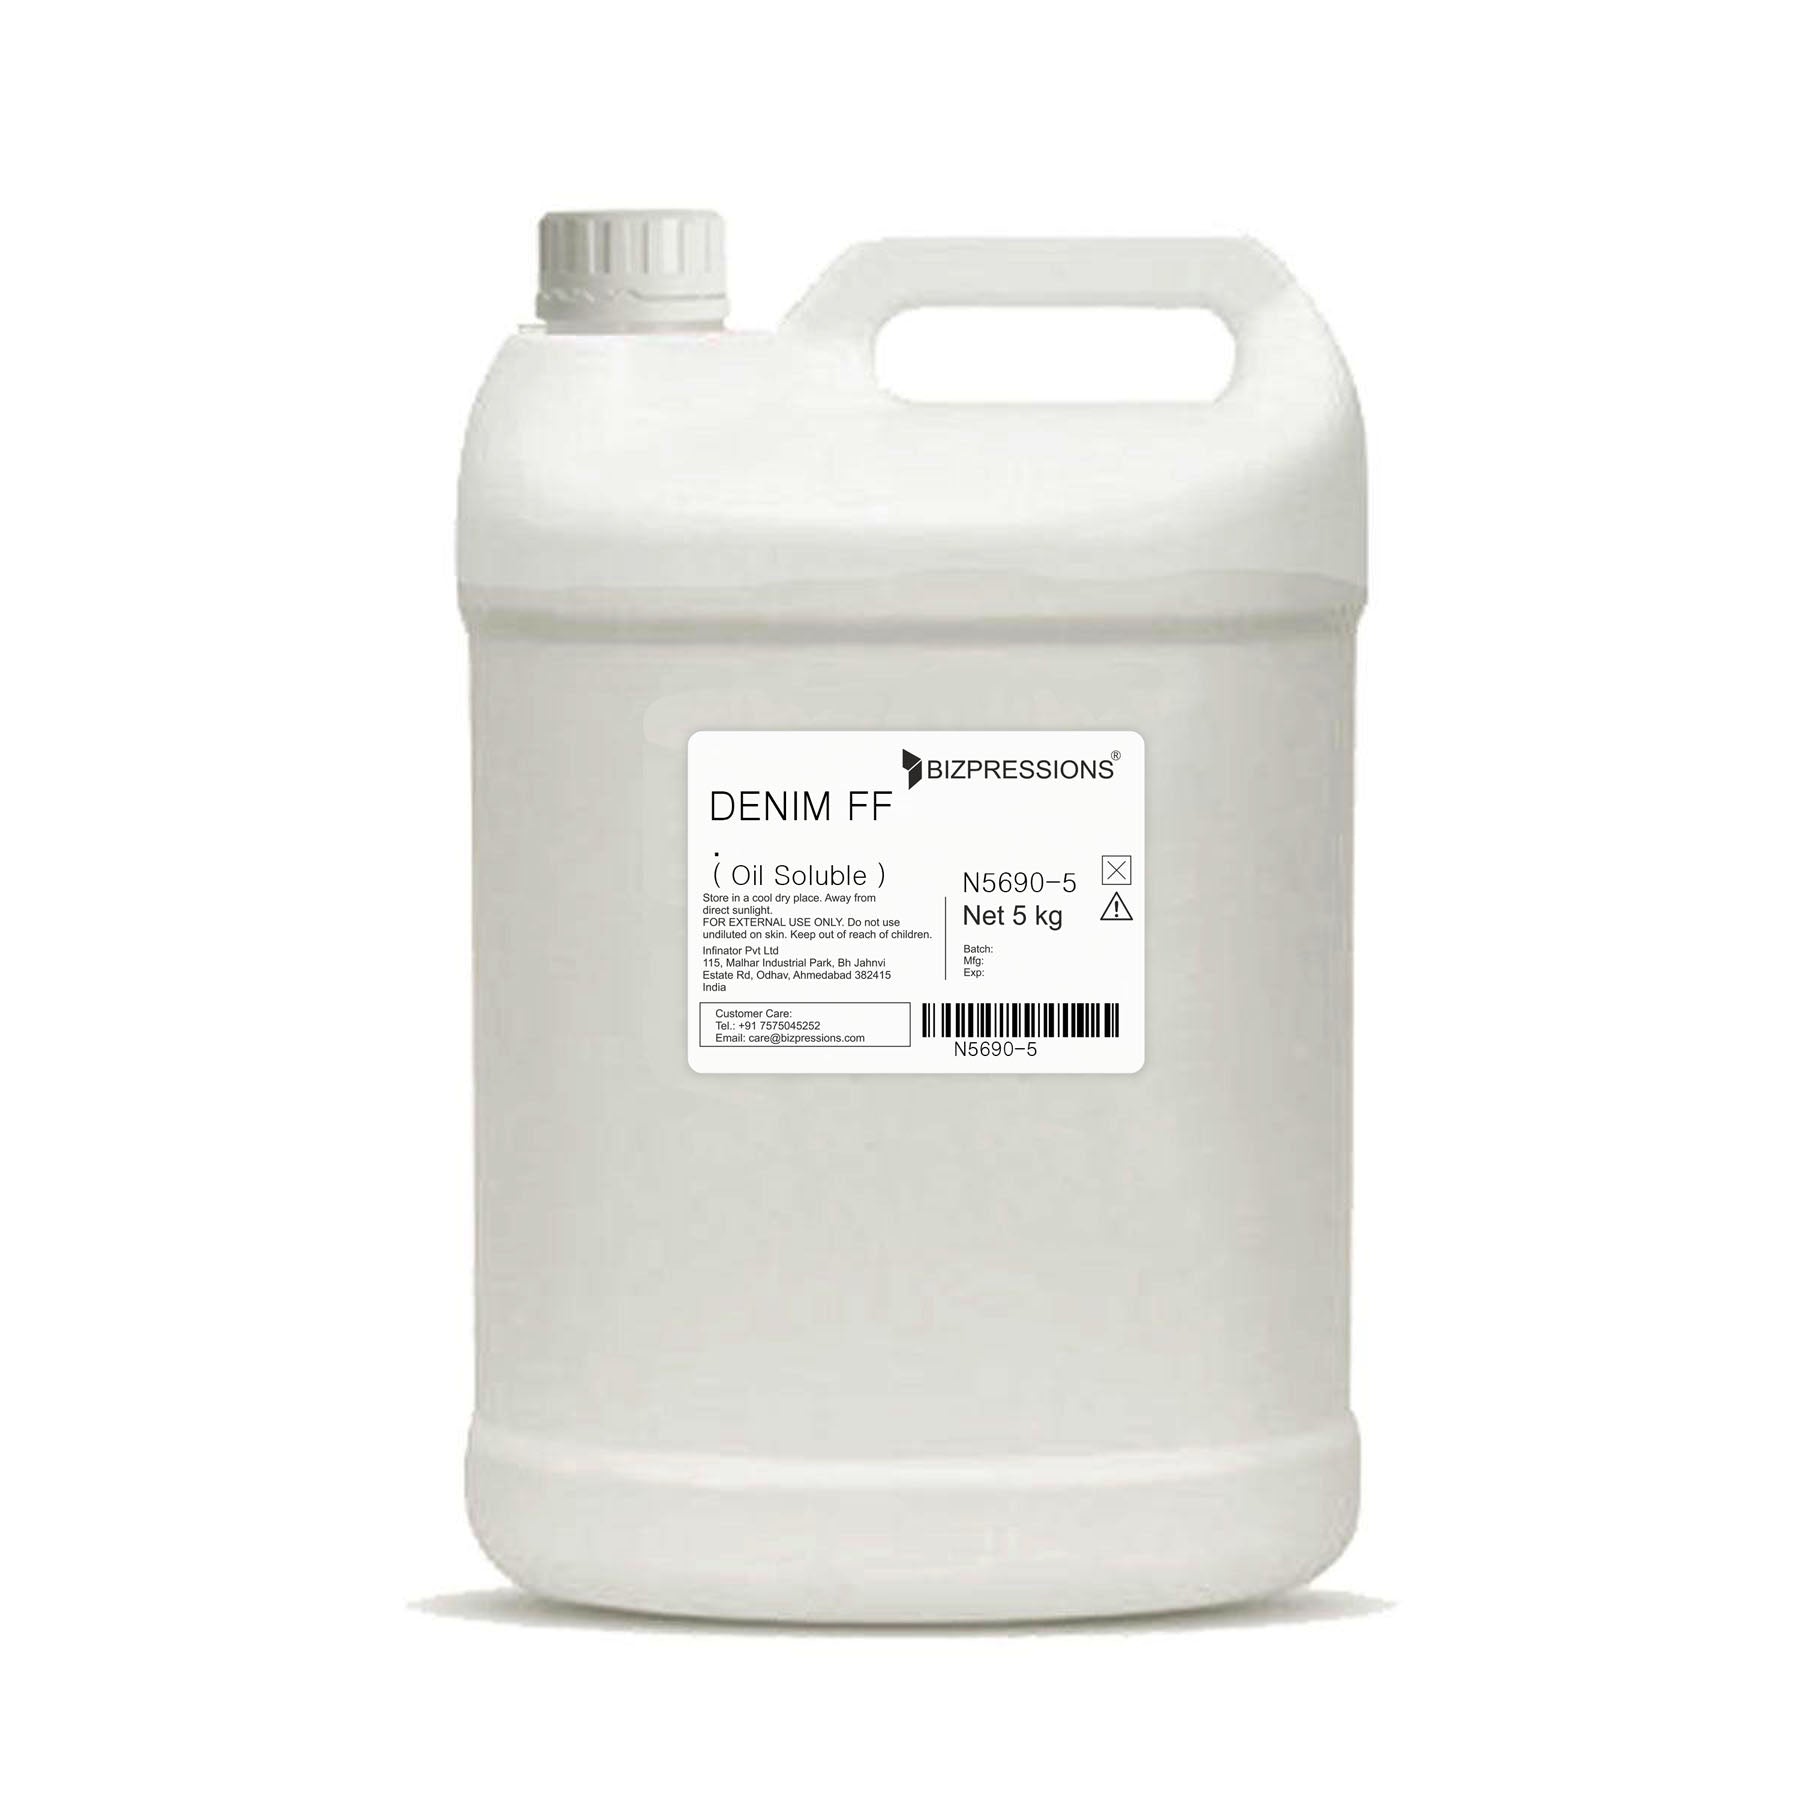 DENIM FF - Fragrance ( Oil Soluble ) - 5 kg